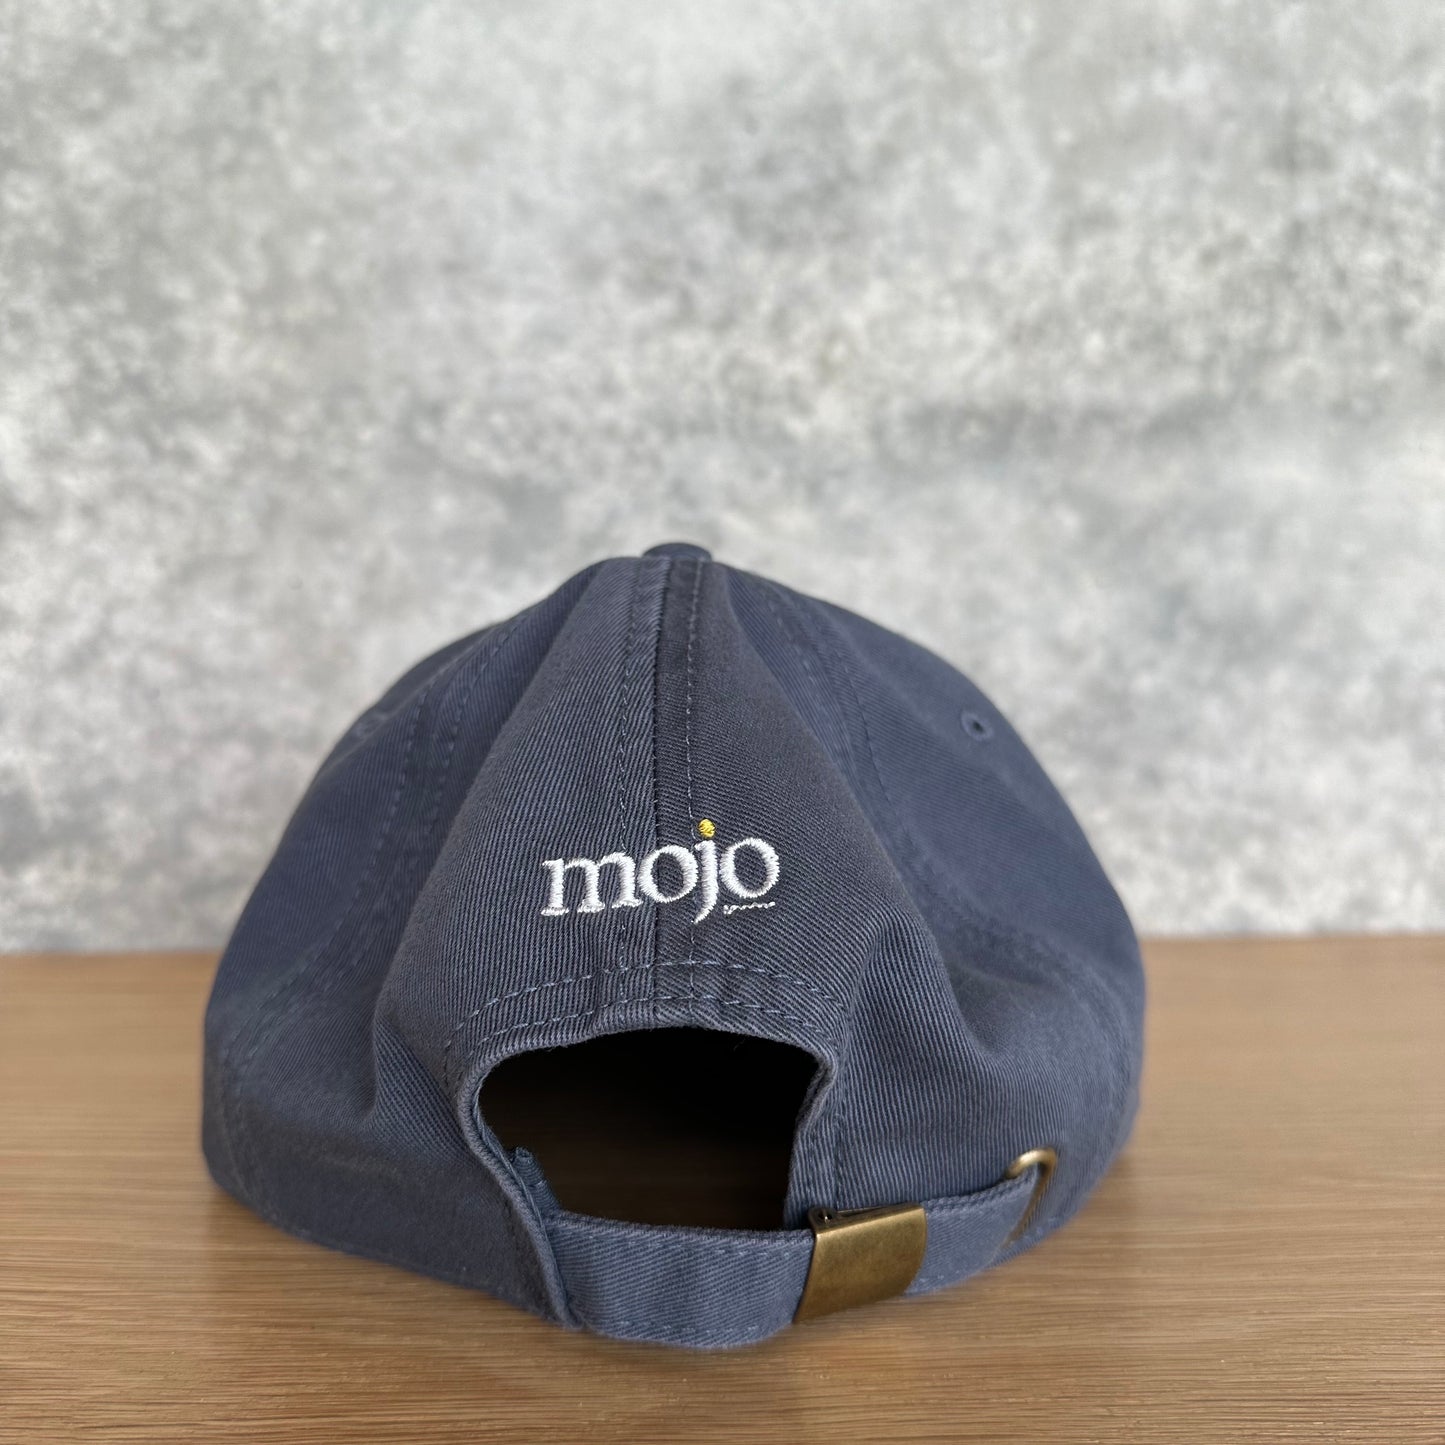 Mojo Embrace Your Weird Cap